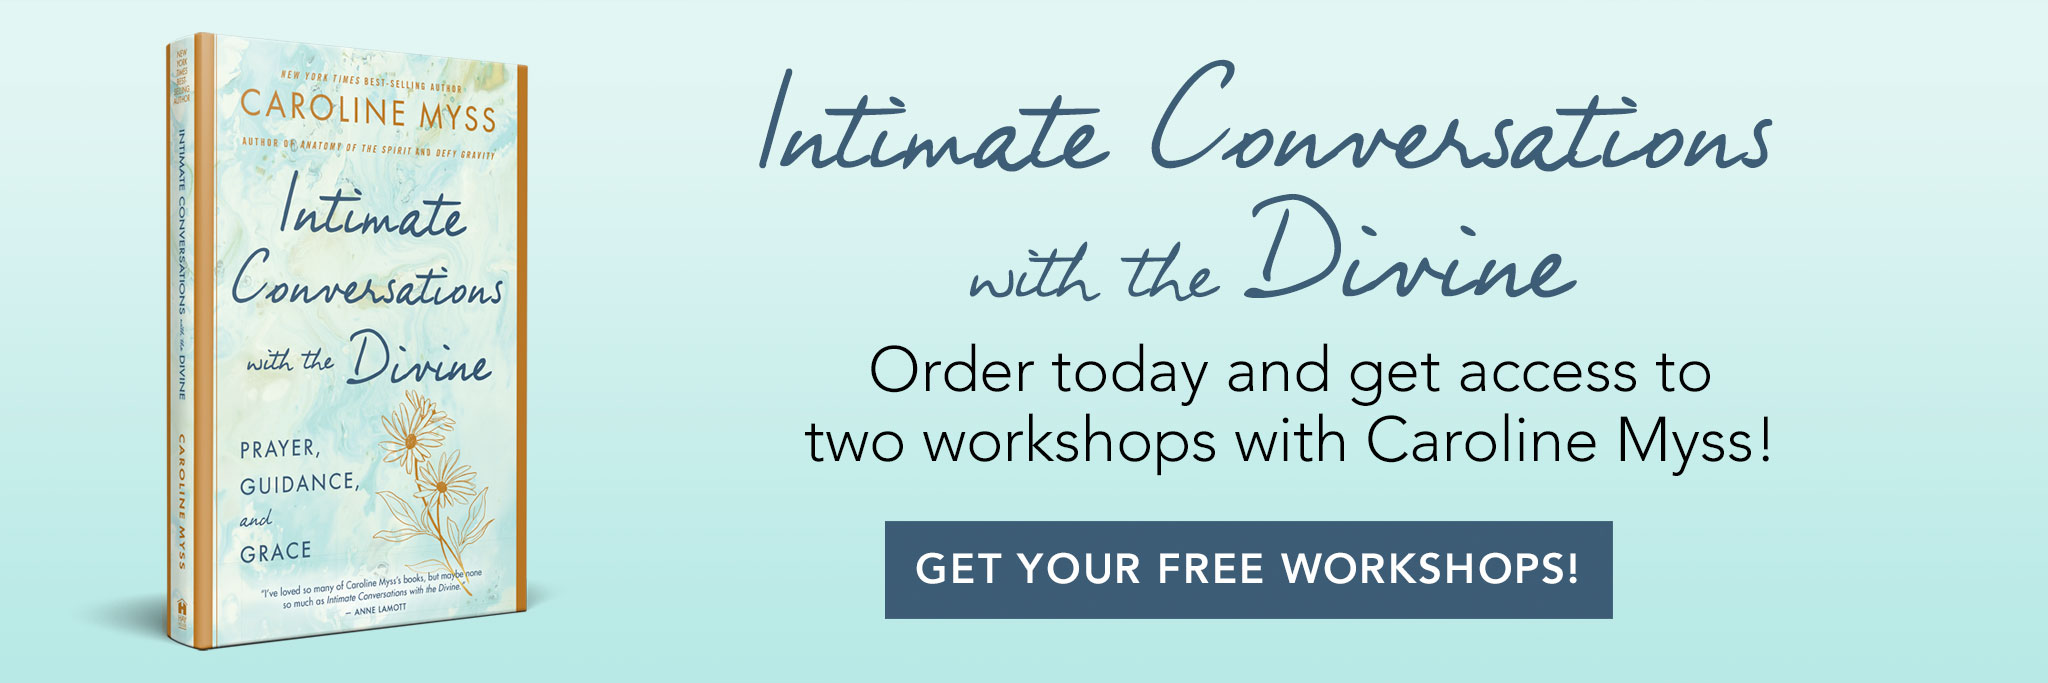 Intimate Conversations with the Divine Bonus Workshop Offer